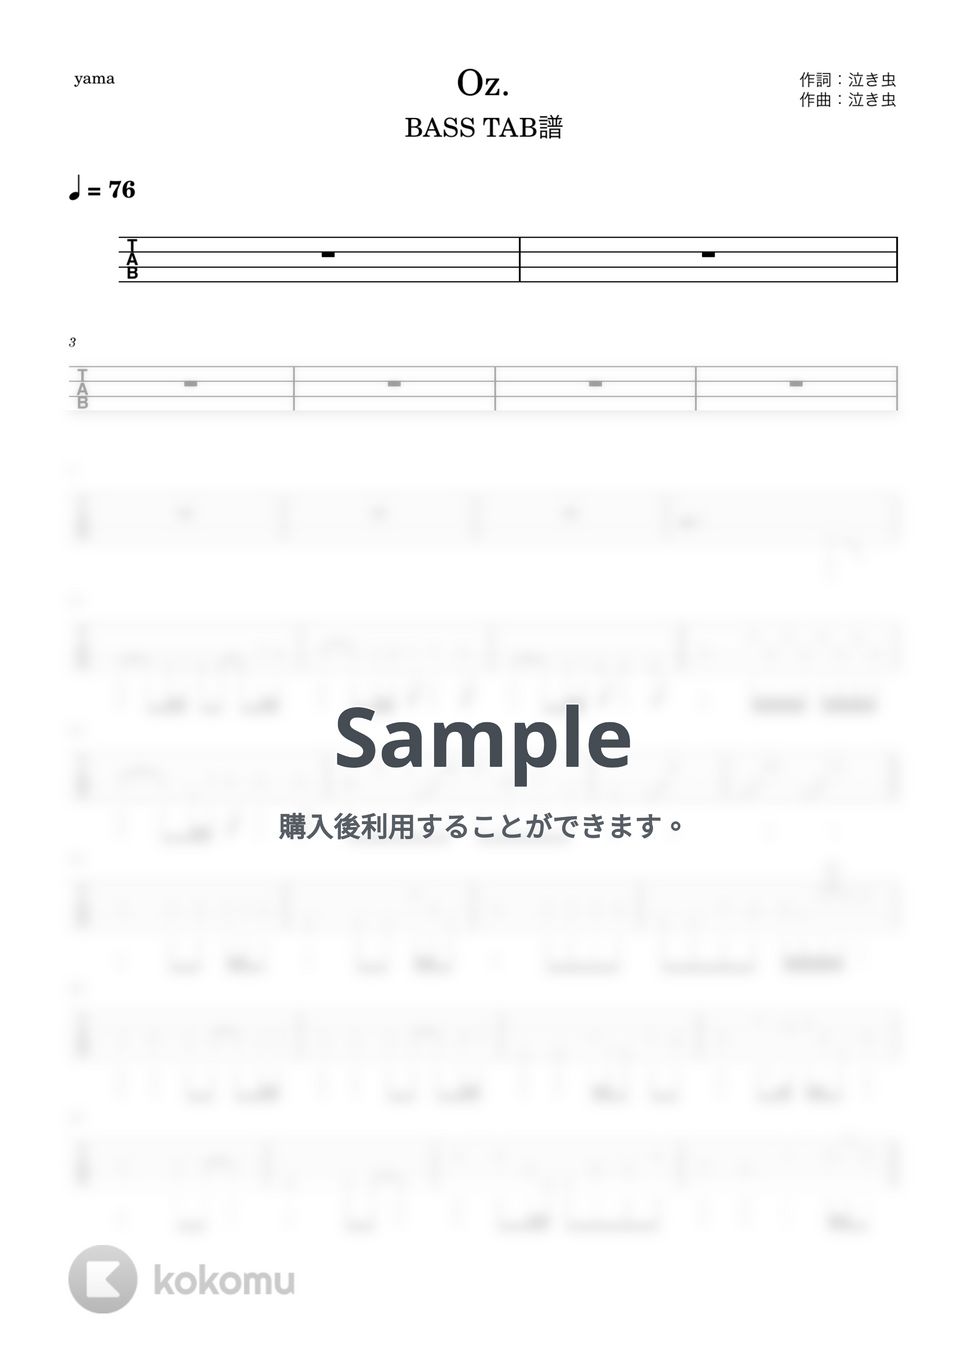 yama - Oz. (『ベースTAB譜』4弦ベース対応) by 箱譜屋